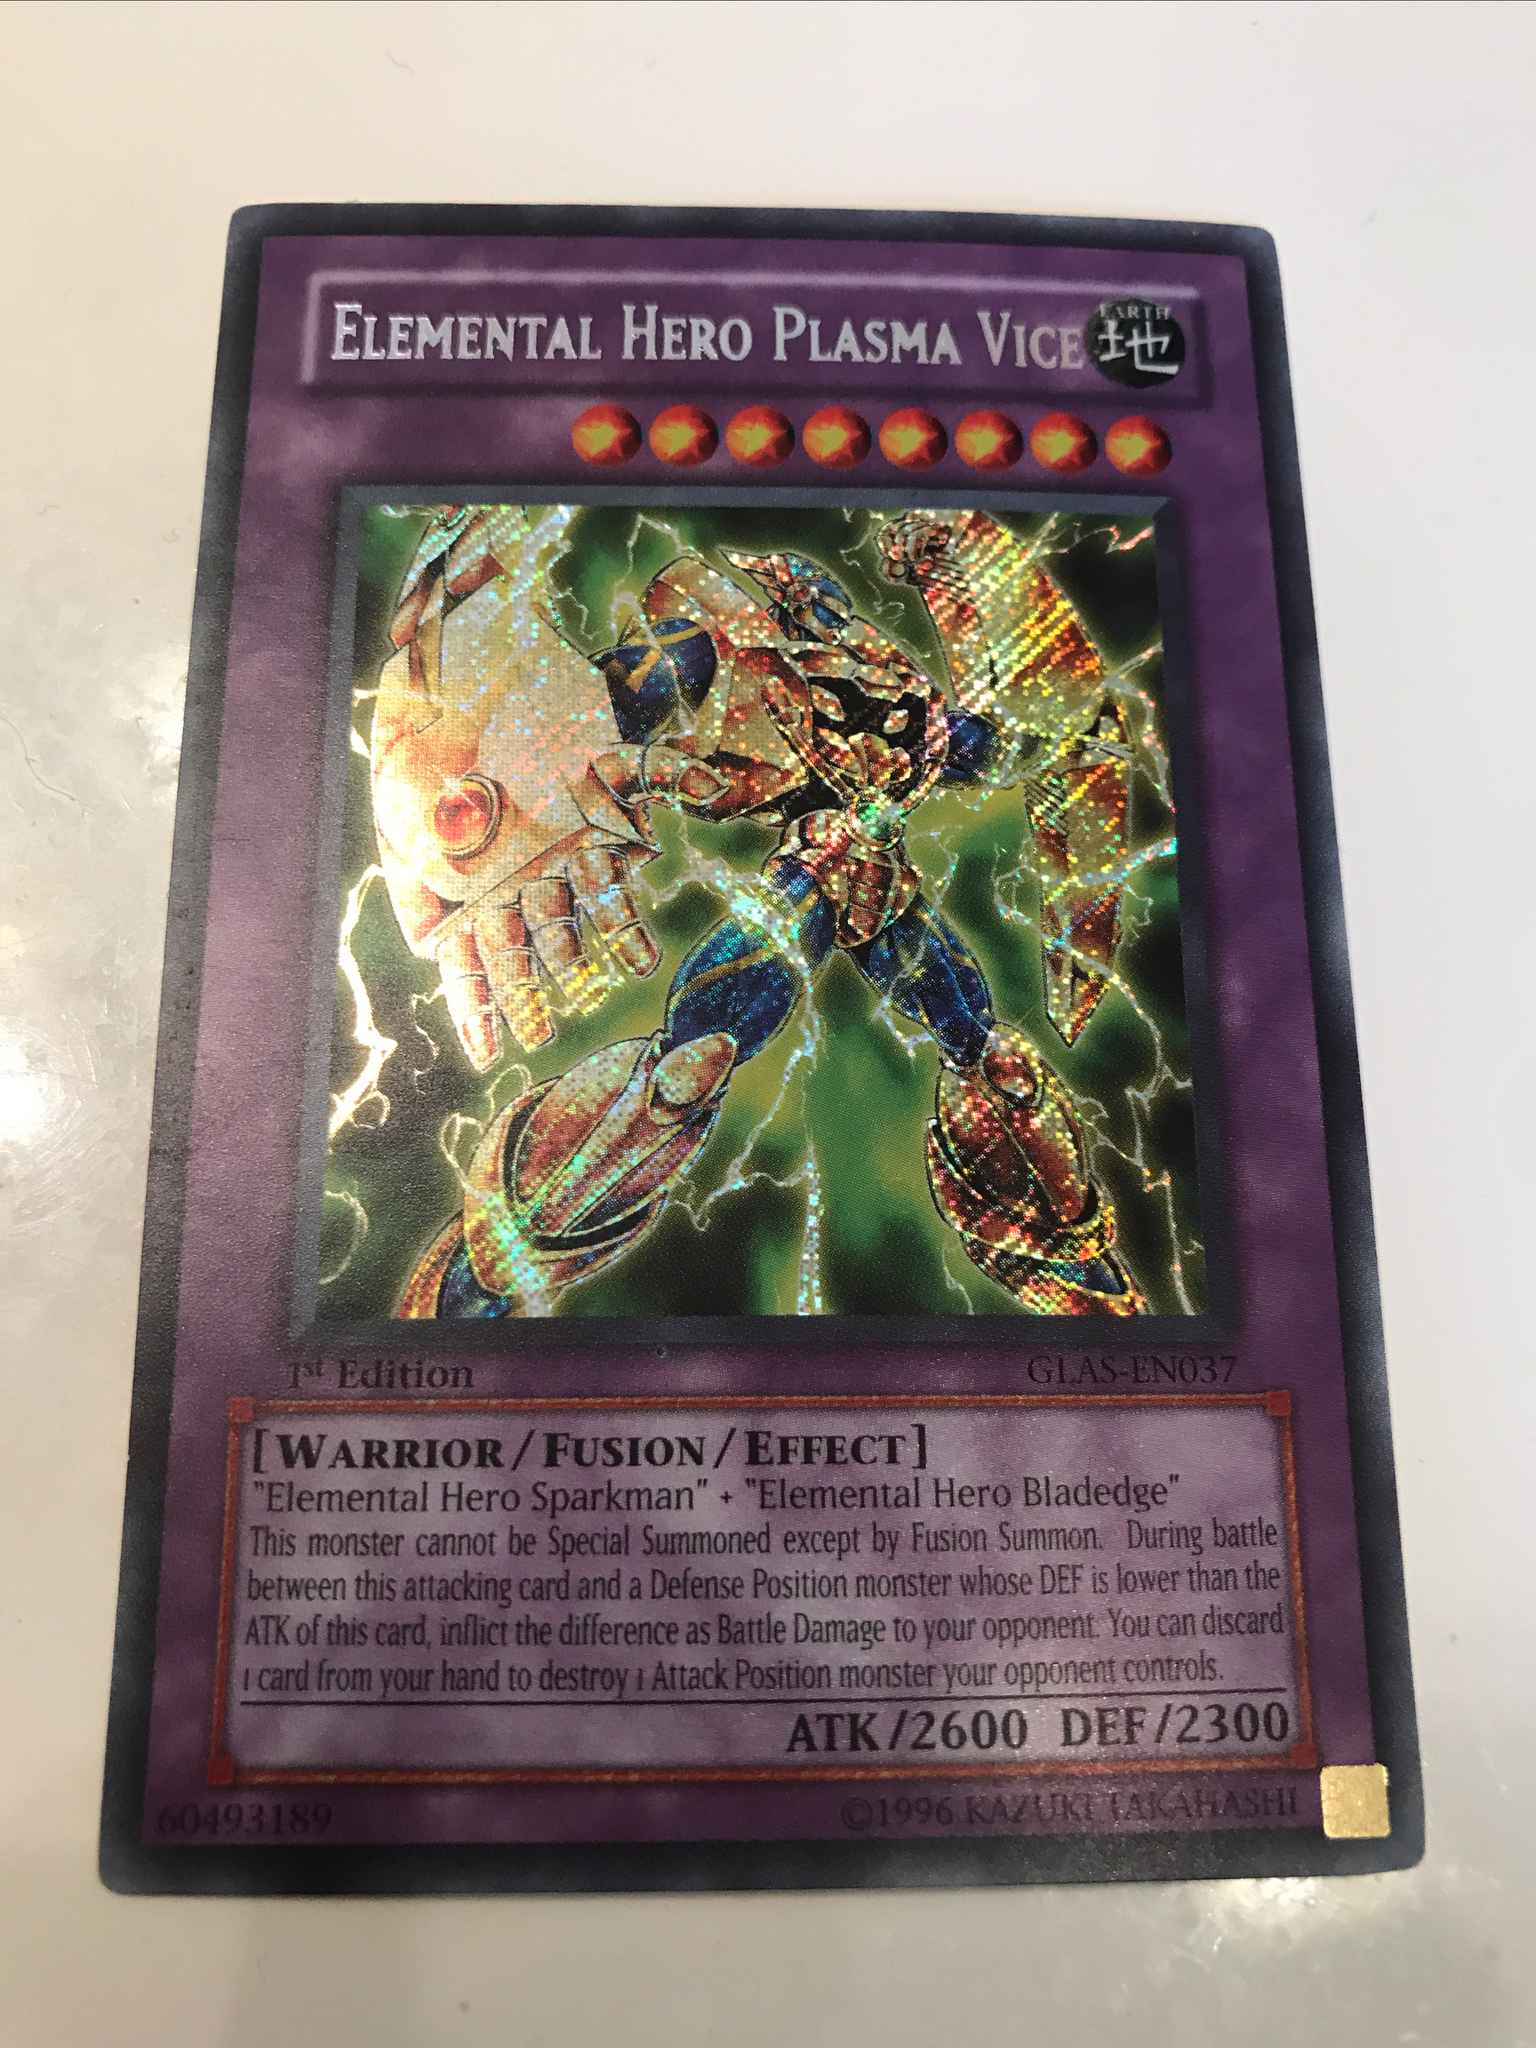 Details about   Elemental Hero Plasma Vice Secret Rare Limited Edition 